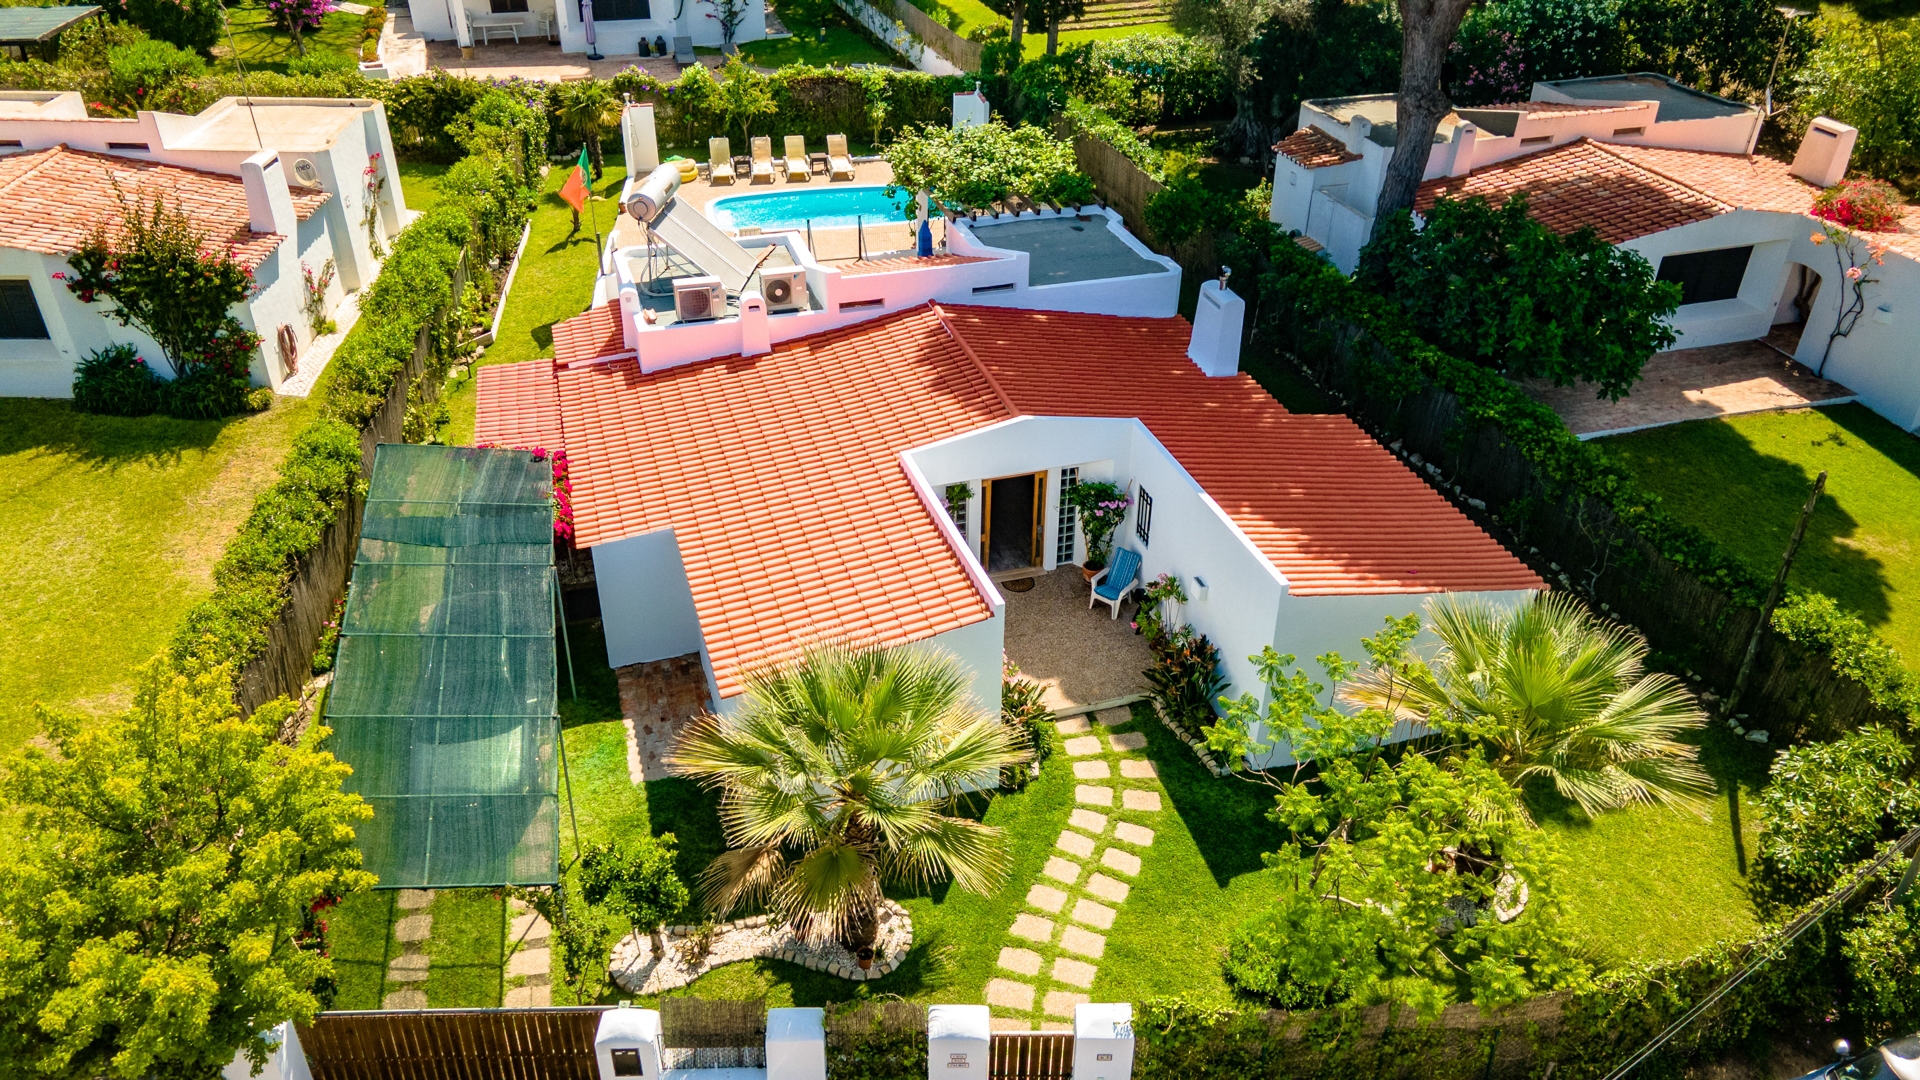 Real Estate Agents - Lagos - Vilamoura - Tavira - Algarve - Alentejo